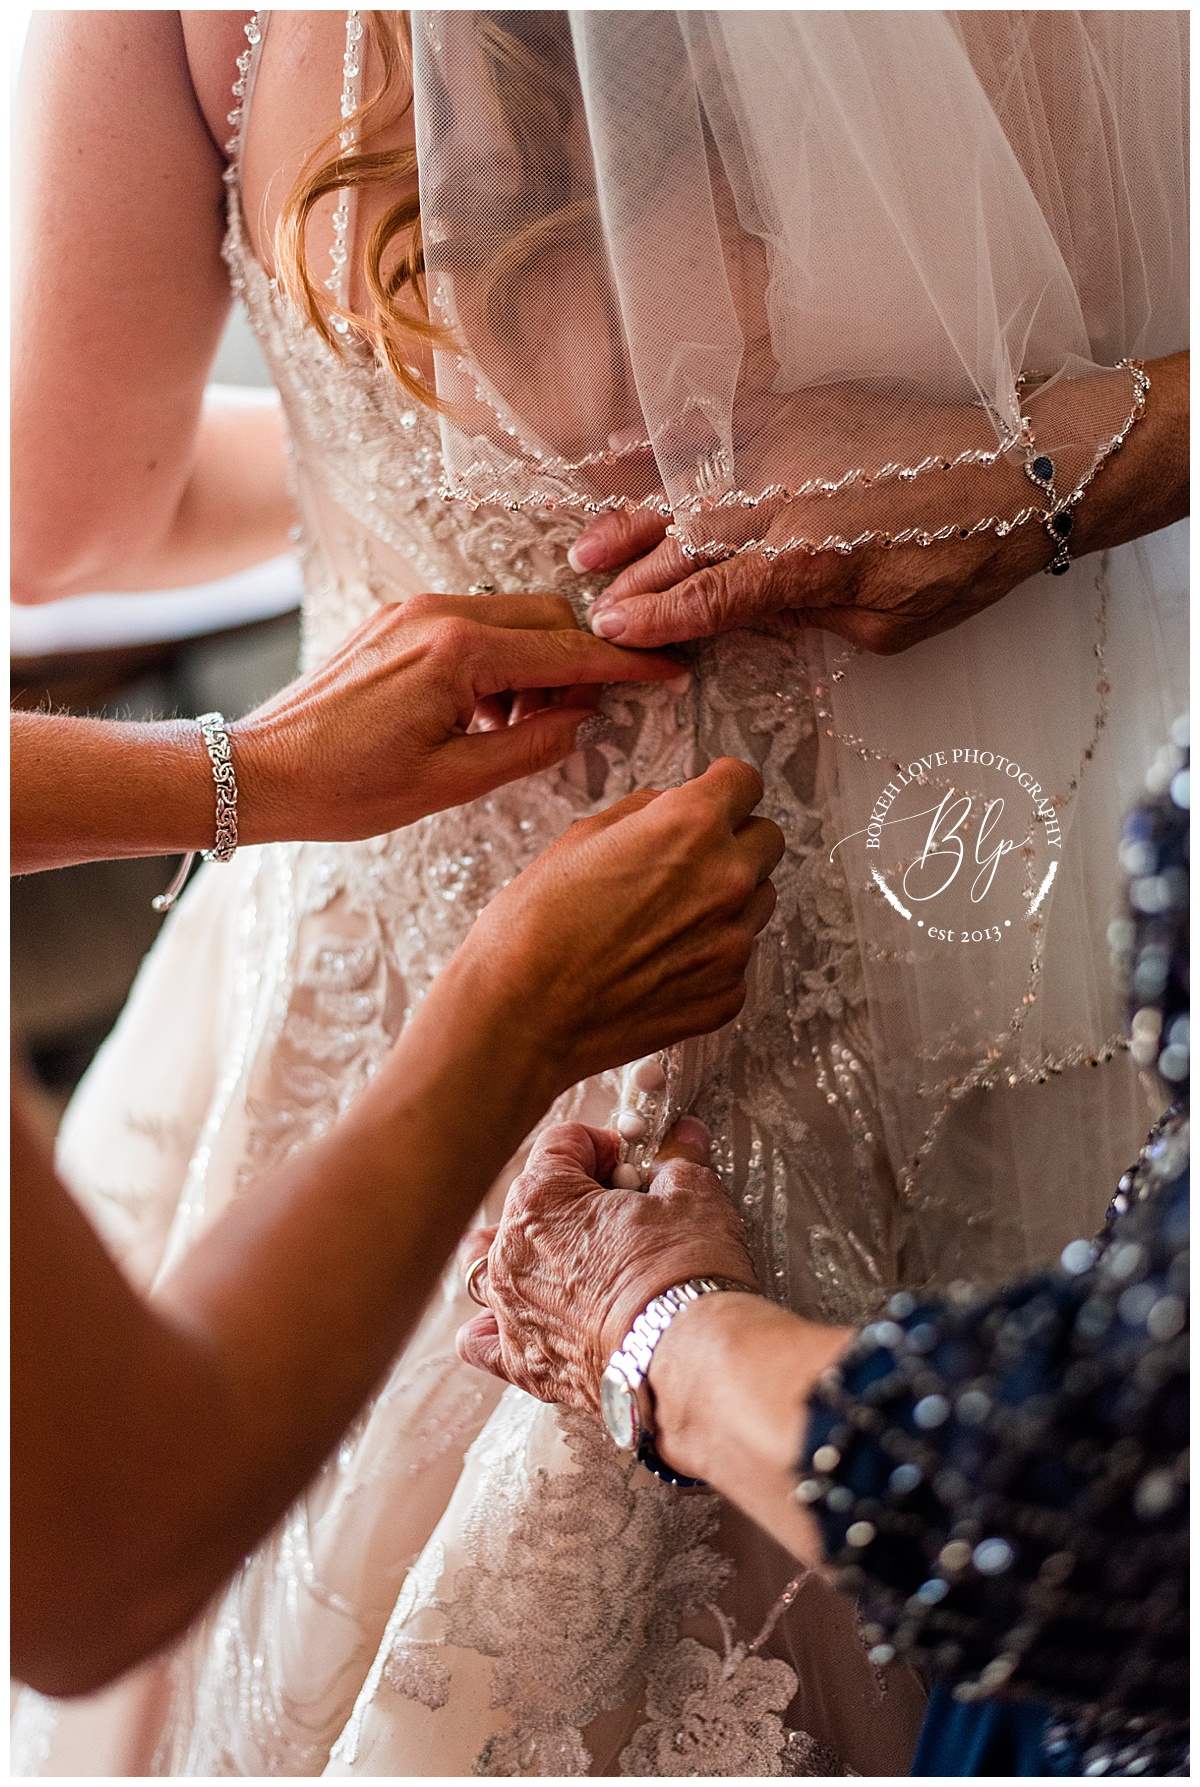 Bokeh Love Photography, Cape May Beach Wedding, Getting Reach Photos, Wedding Dress